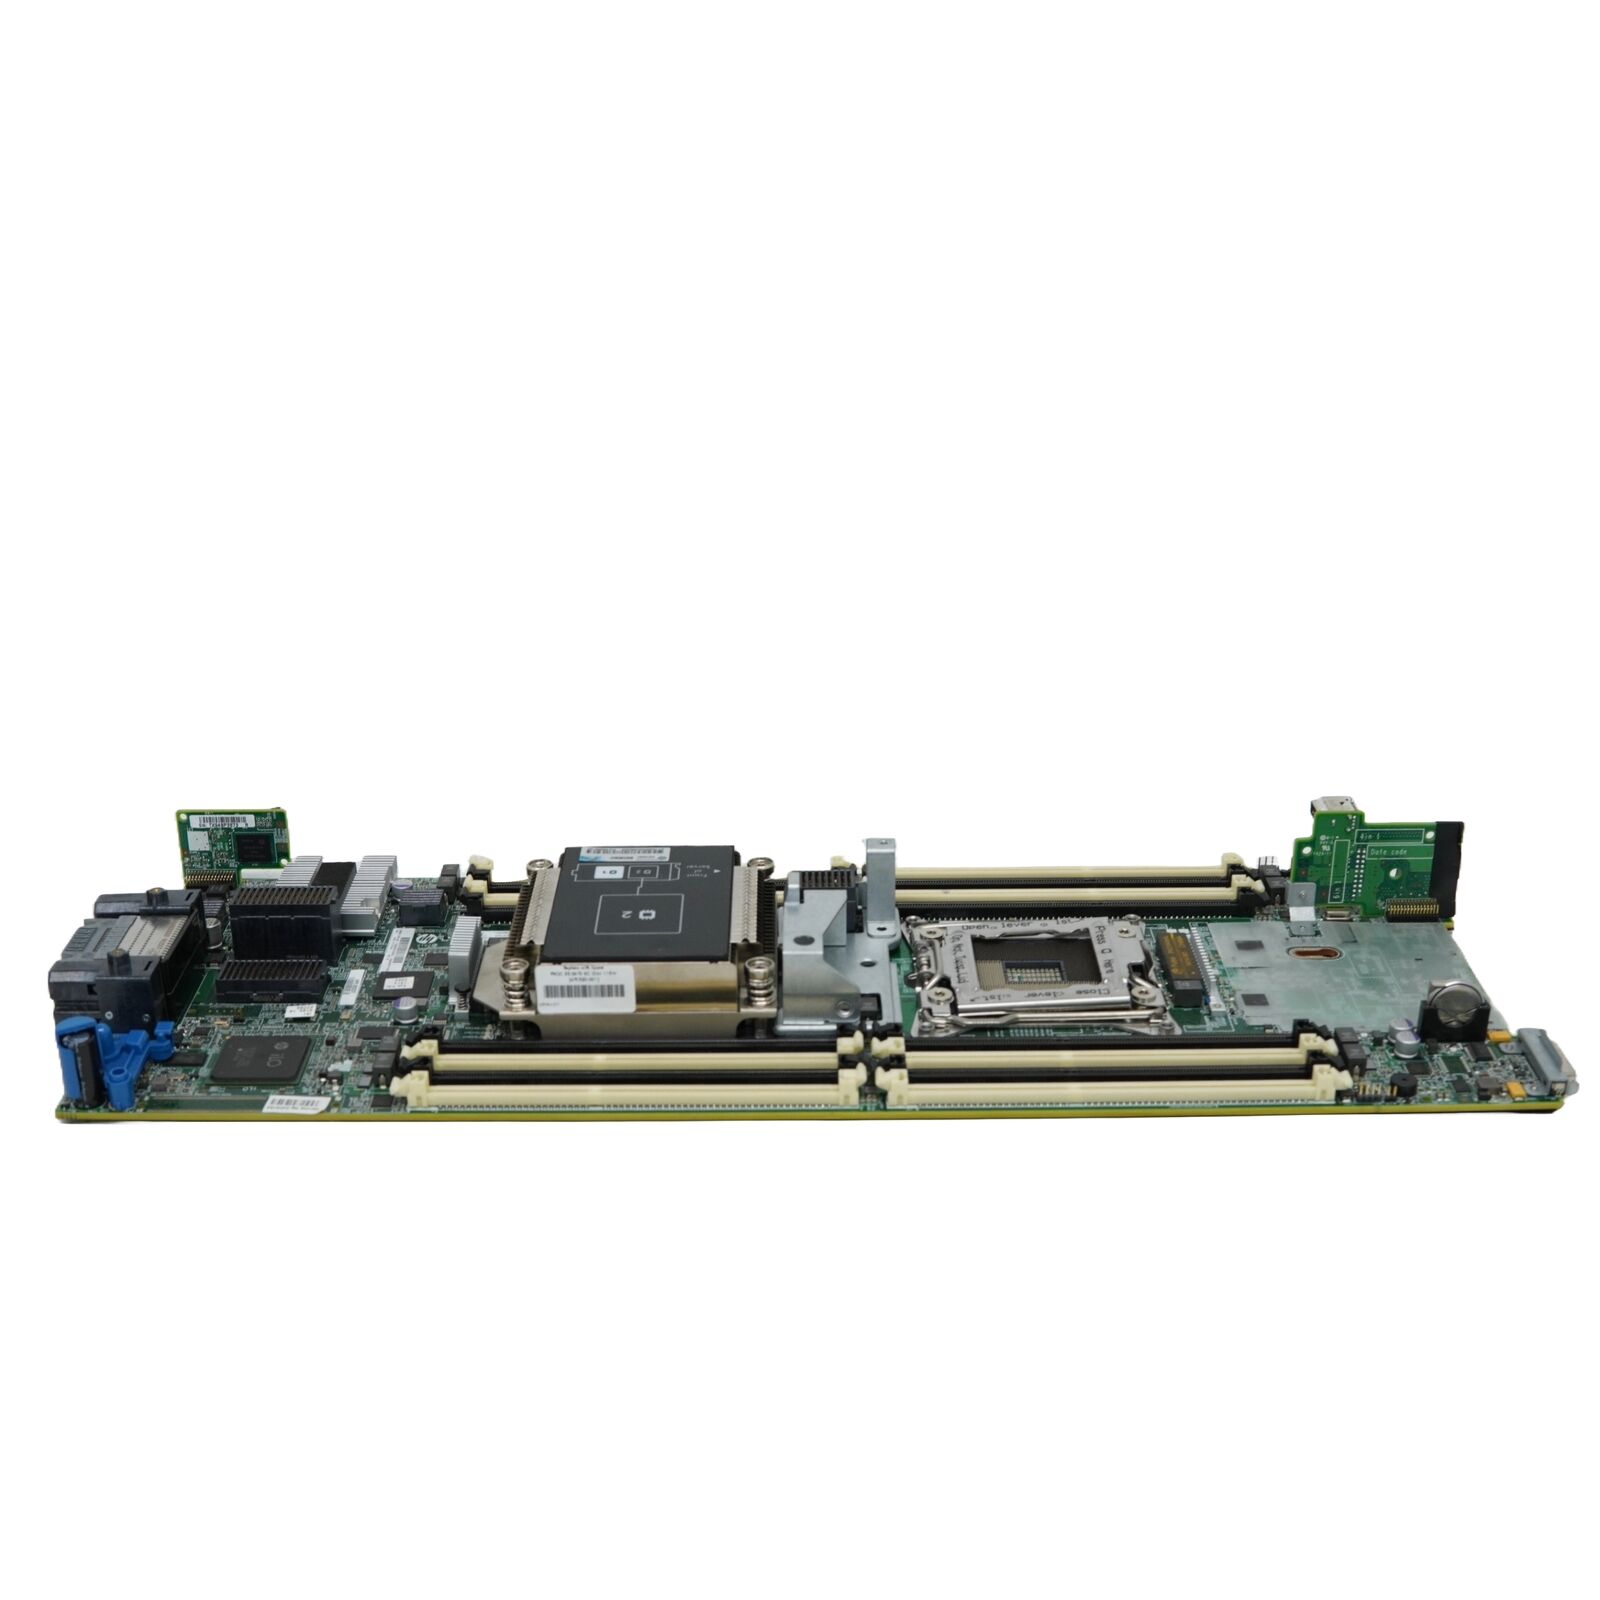 HP HPE962031 Blade server motherboard